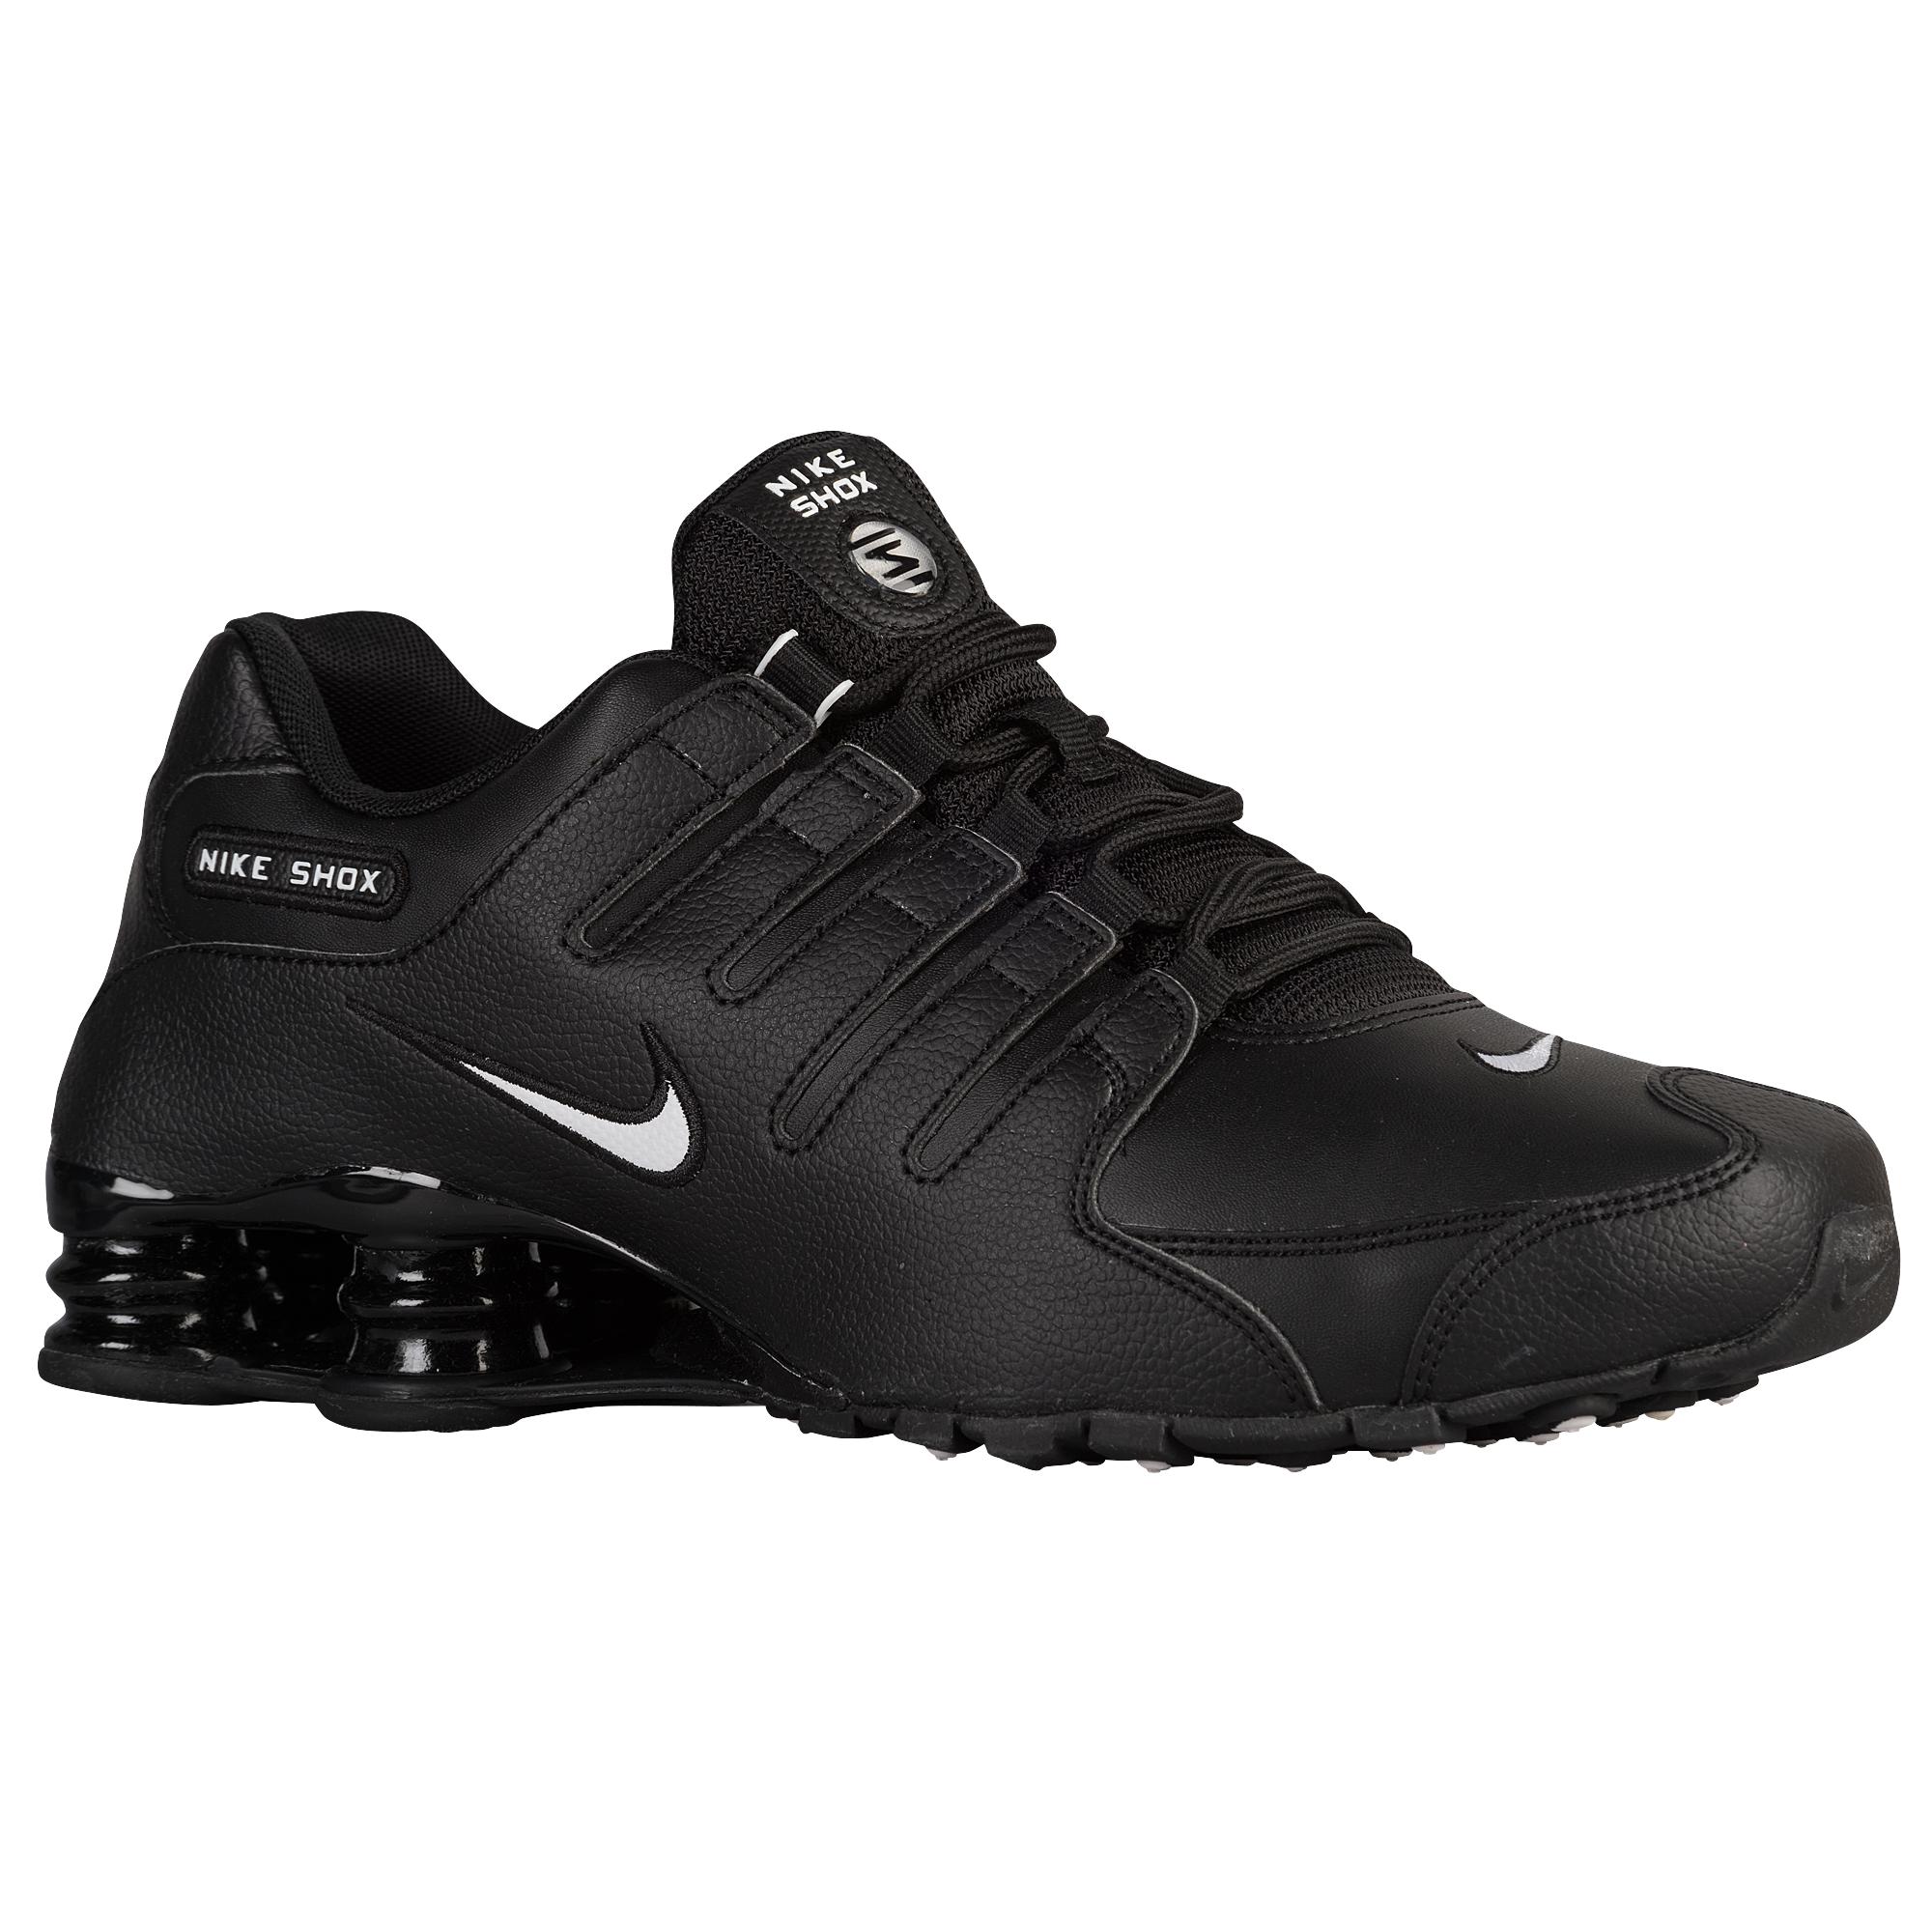 Nike Synthetic Shox Nz Eu in Black/White/Black (Black) for Men - Lyst